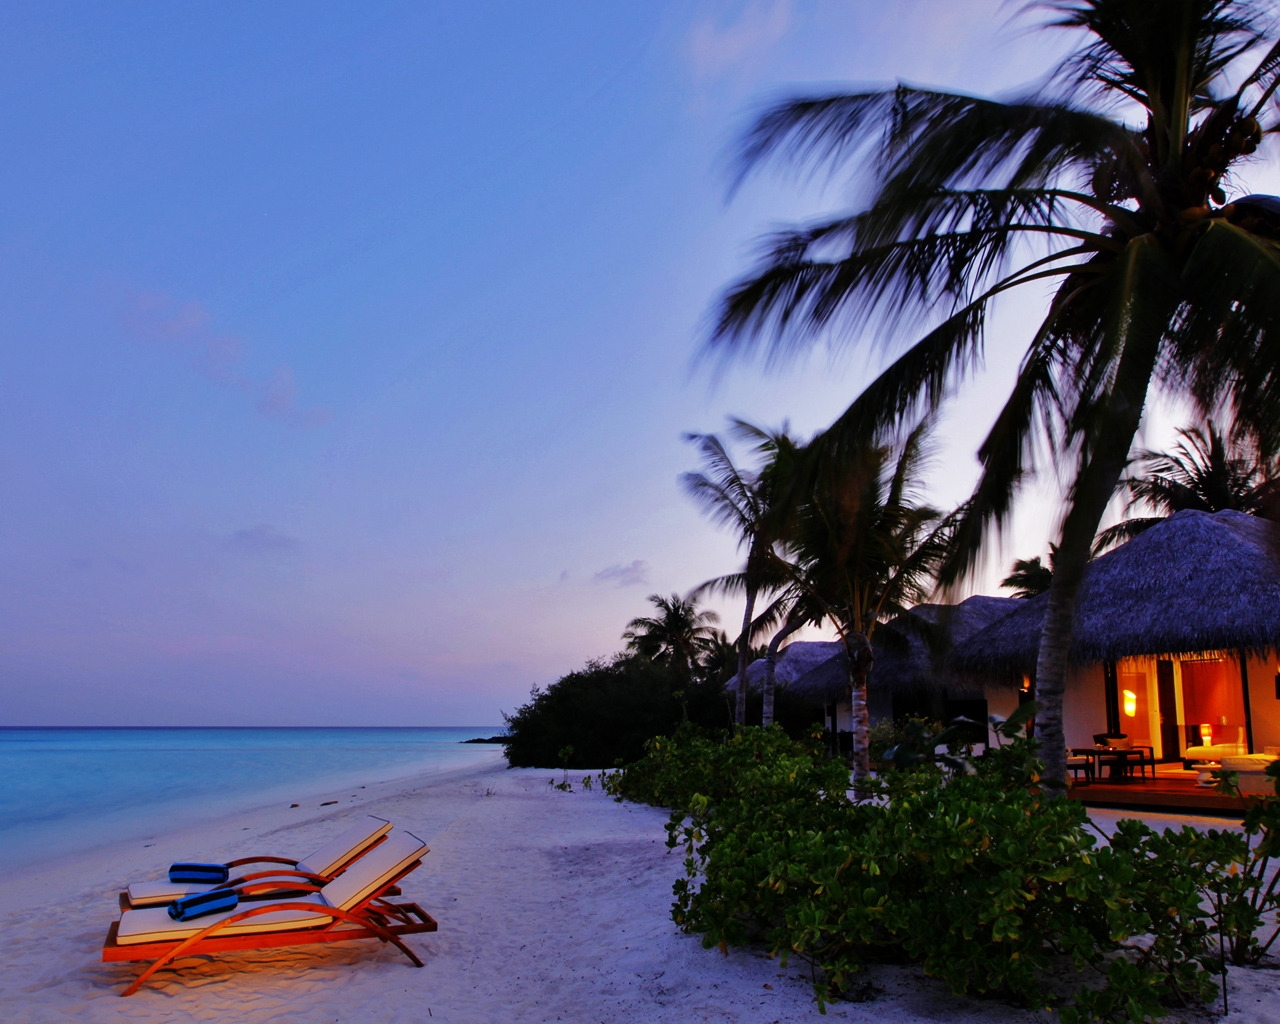 Luxury Beach Resort for 1280 x 1024 resolution